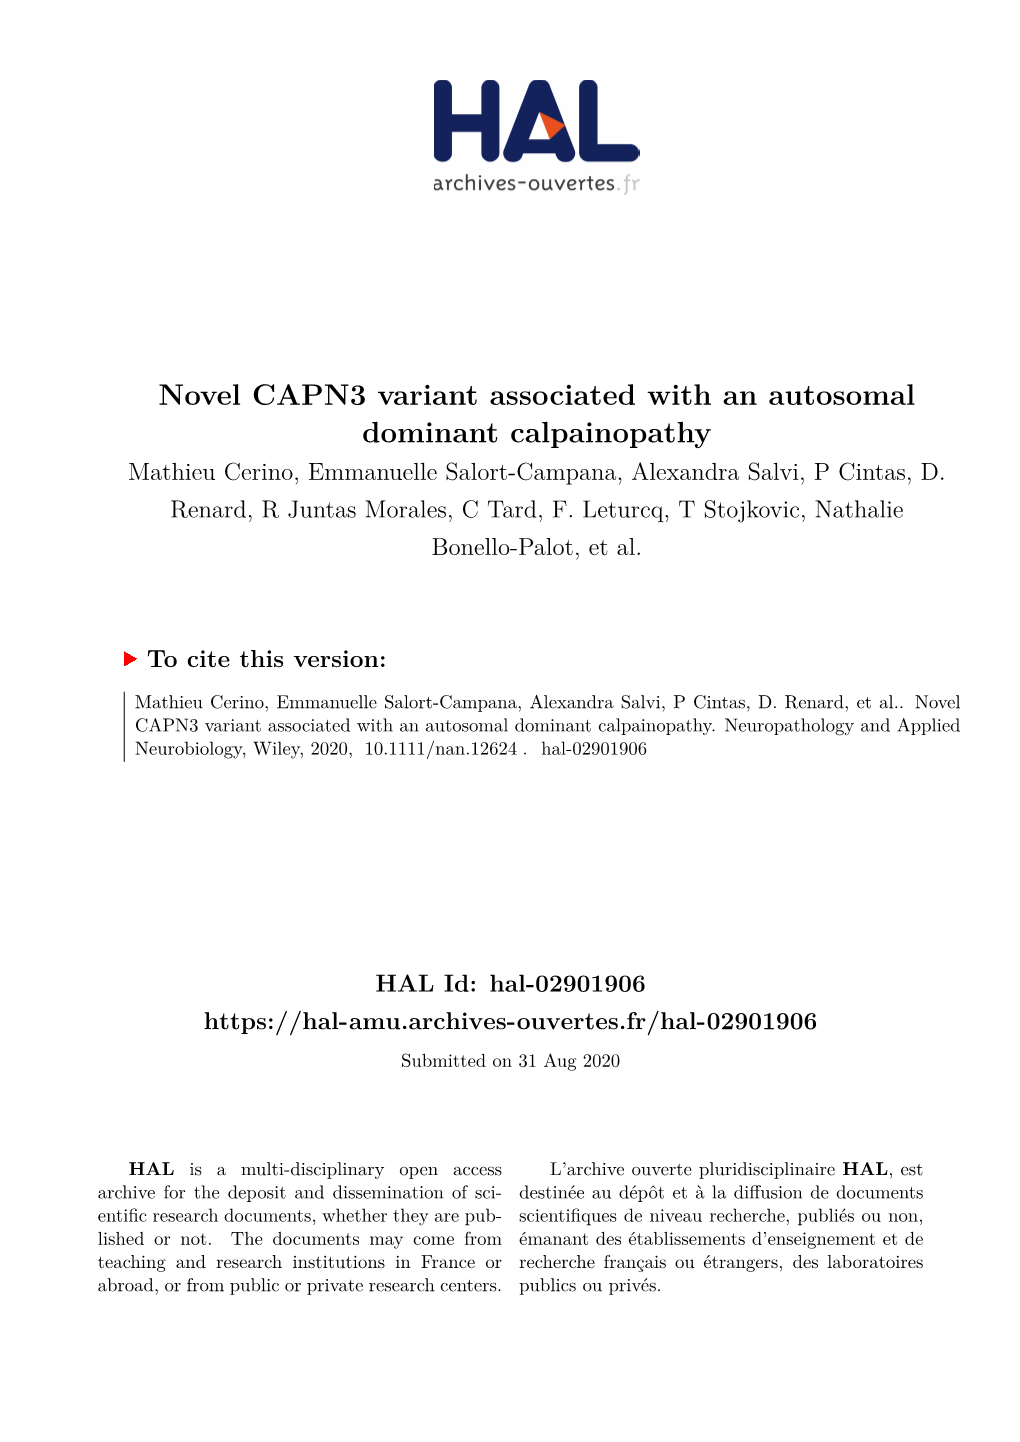 Novel CAPN3 Variant Associated with an Autosomal Dominant Calpainopathy Mathieu Cerino, Emmanuelle Salort-Campana, Alexandra Salvi, P Cintas, D